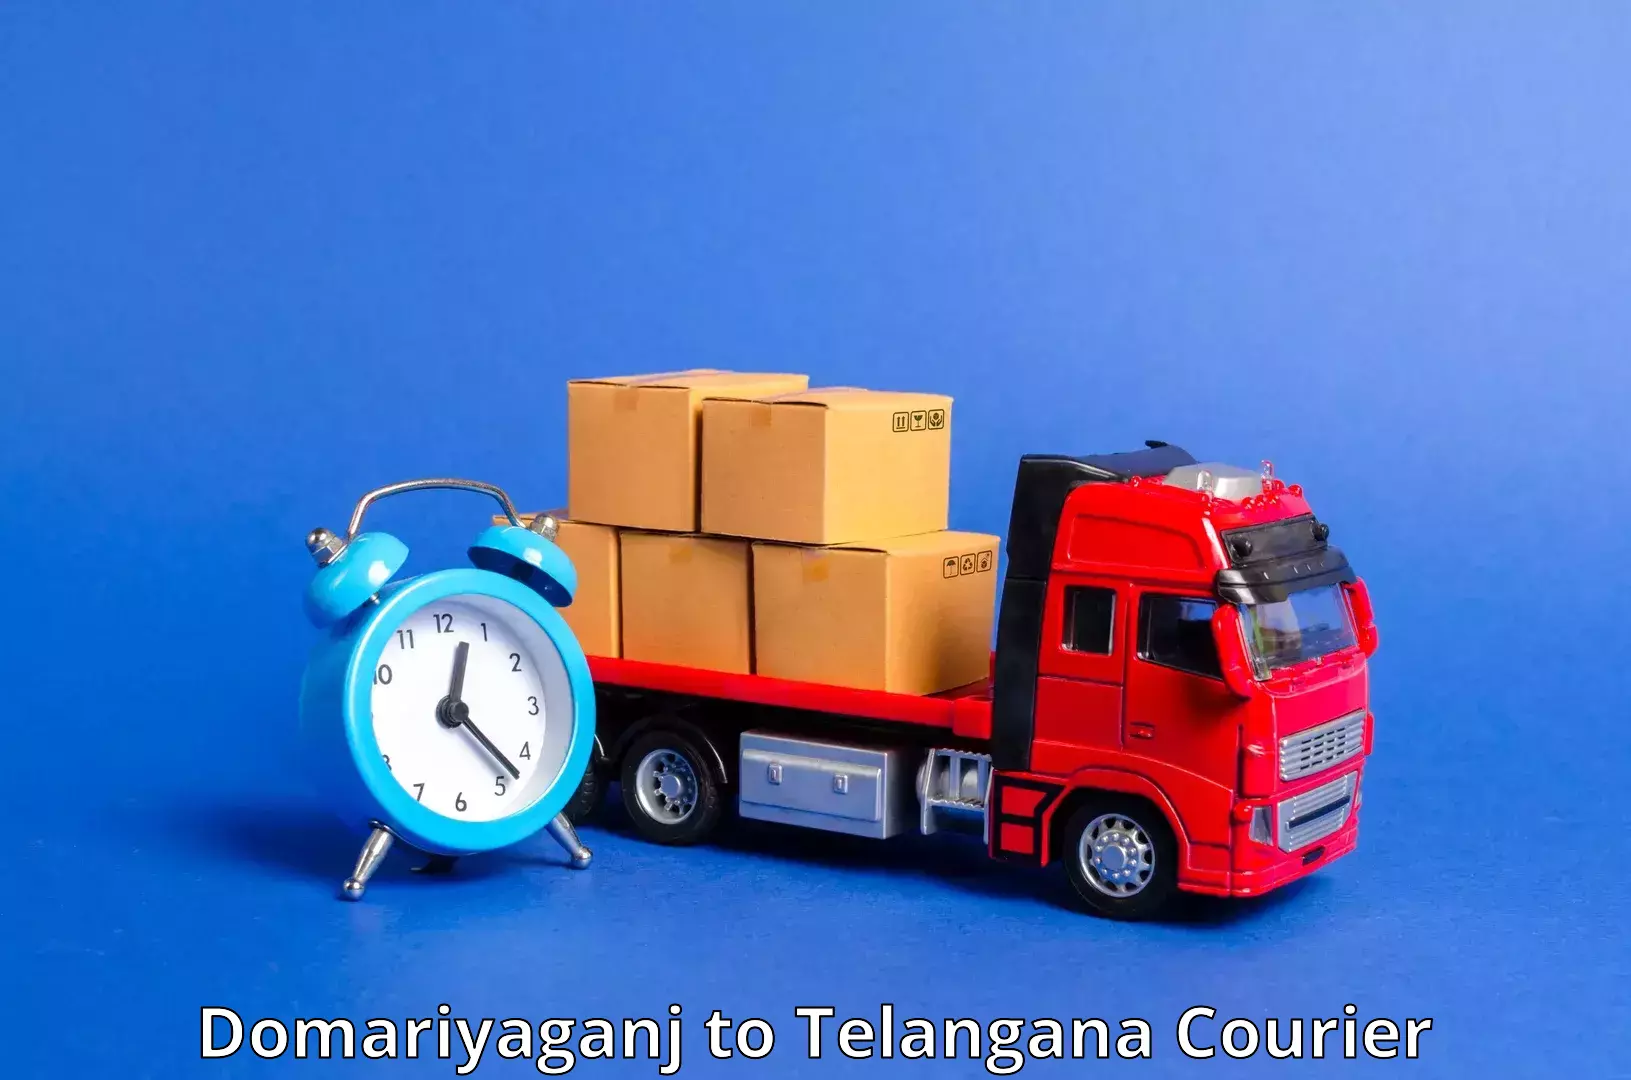 Tech-enabled shipping Domariyaganj to Kothur